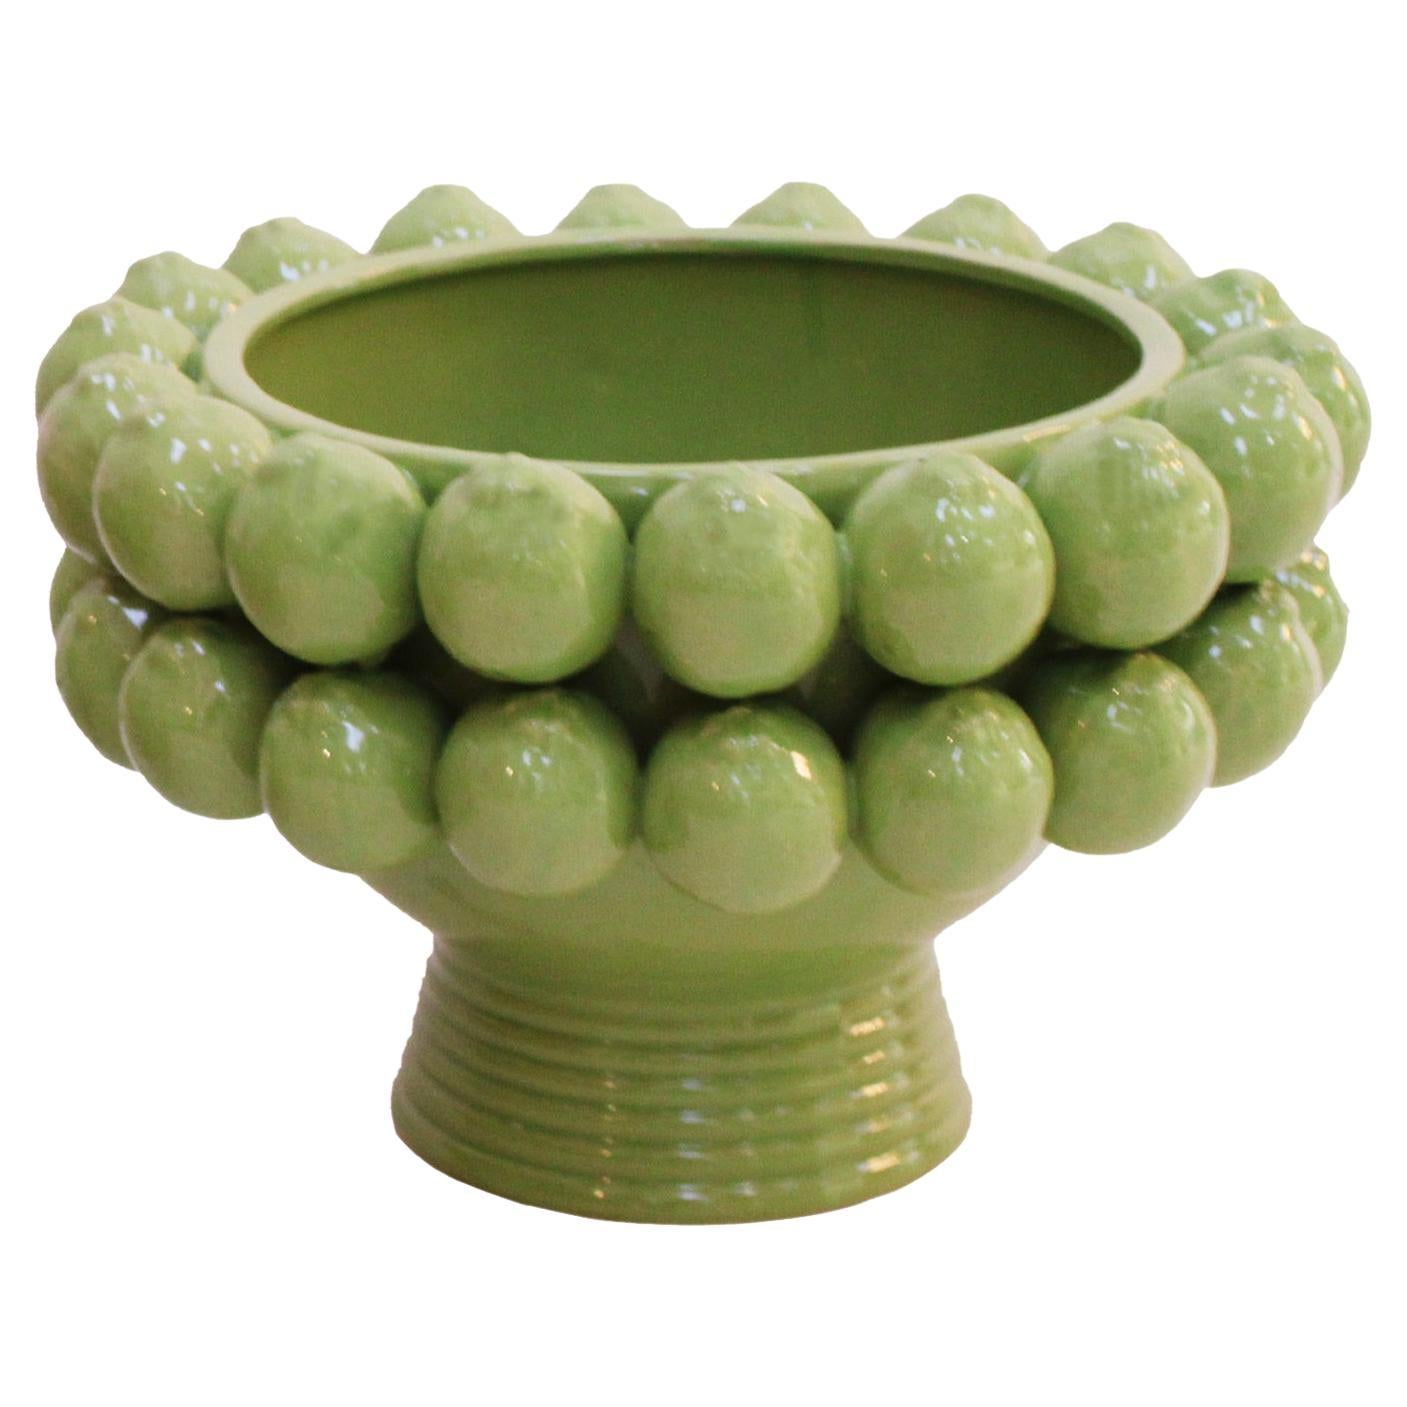 Contemporary Italian Fruit Bowl, Keramikvase mit Fruchtmotiven